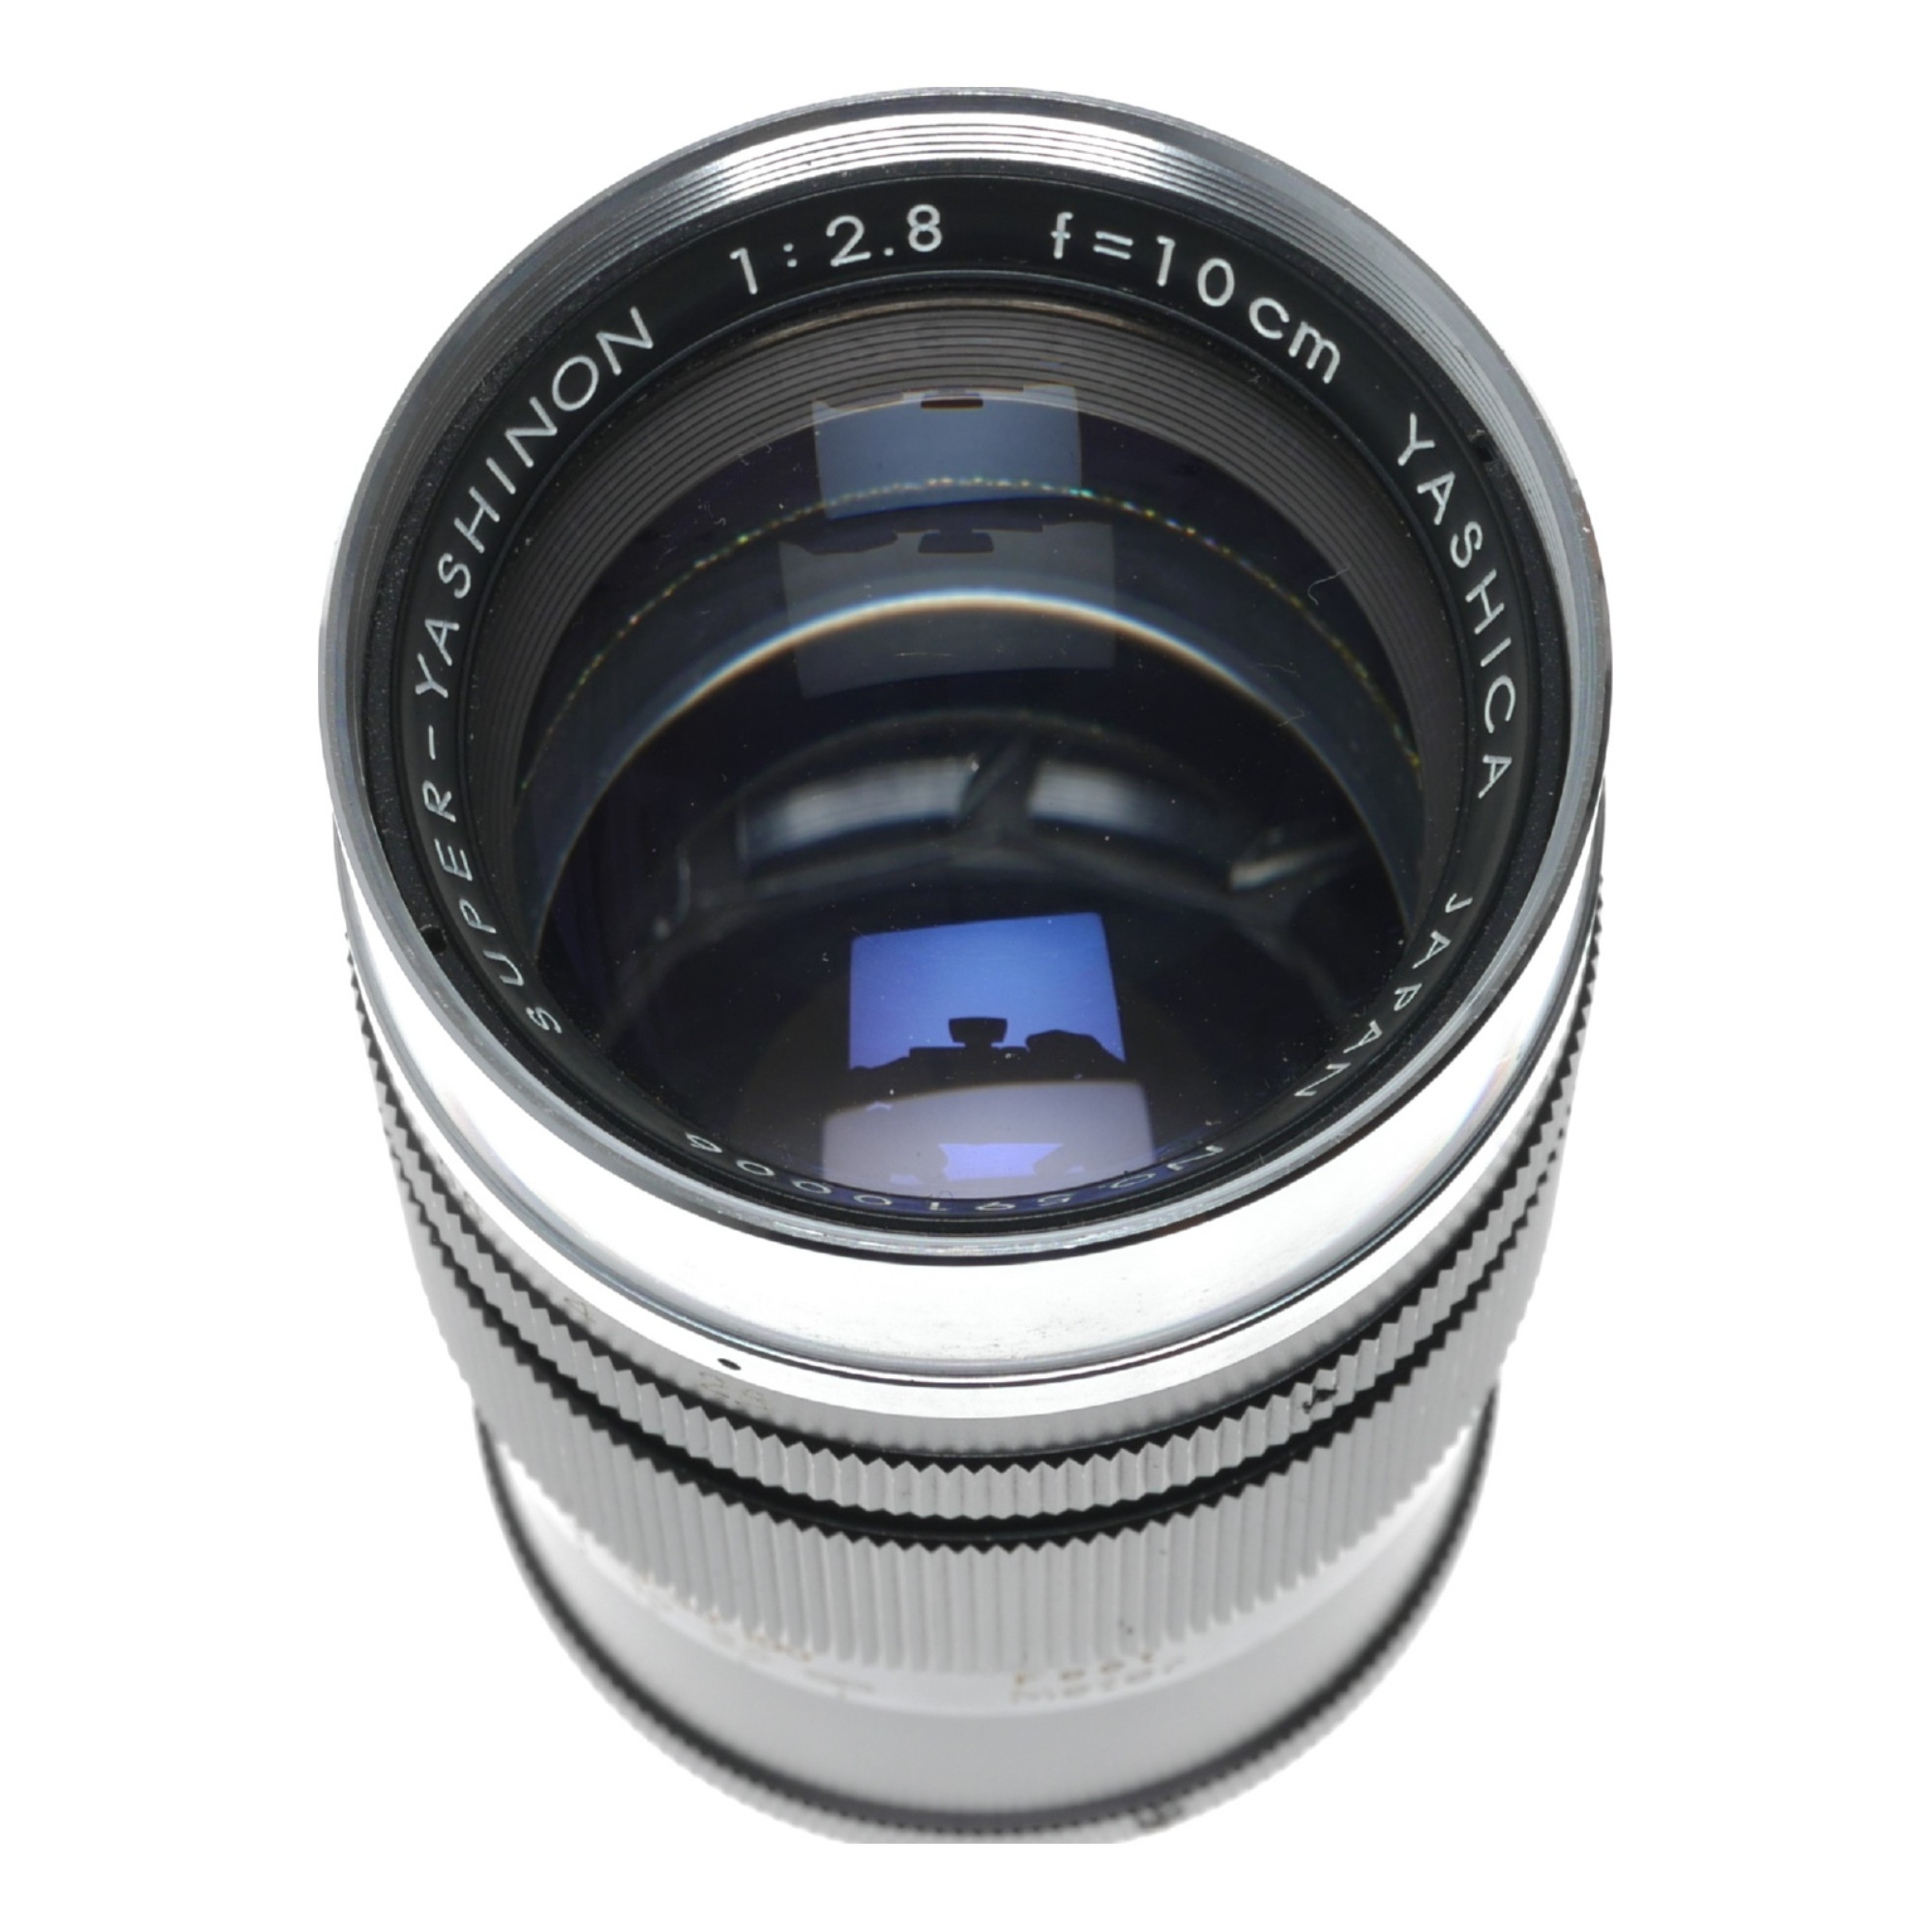 Yashica Super-Yashinon 1:2.8 f=10cm Leica M39 screw mount 2.8/100mm